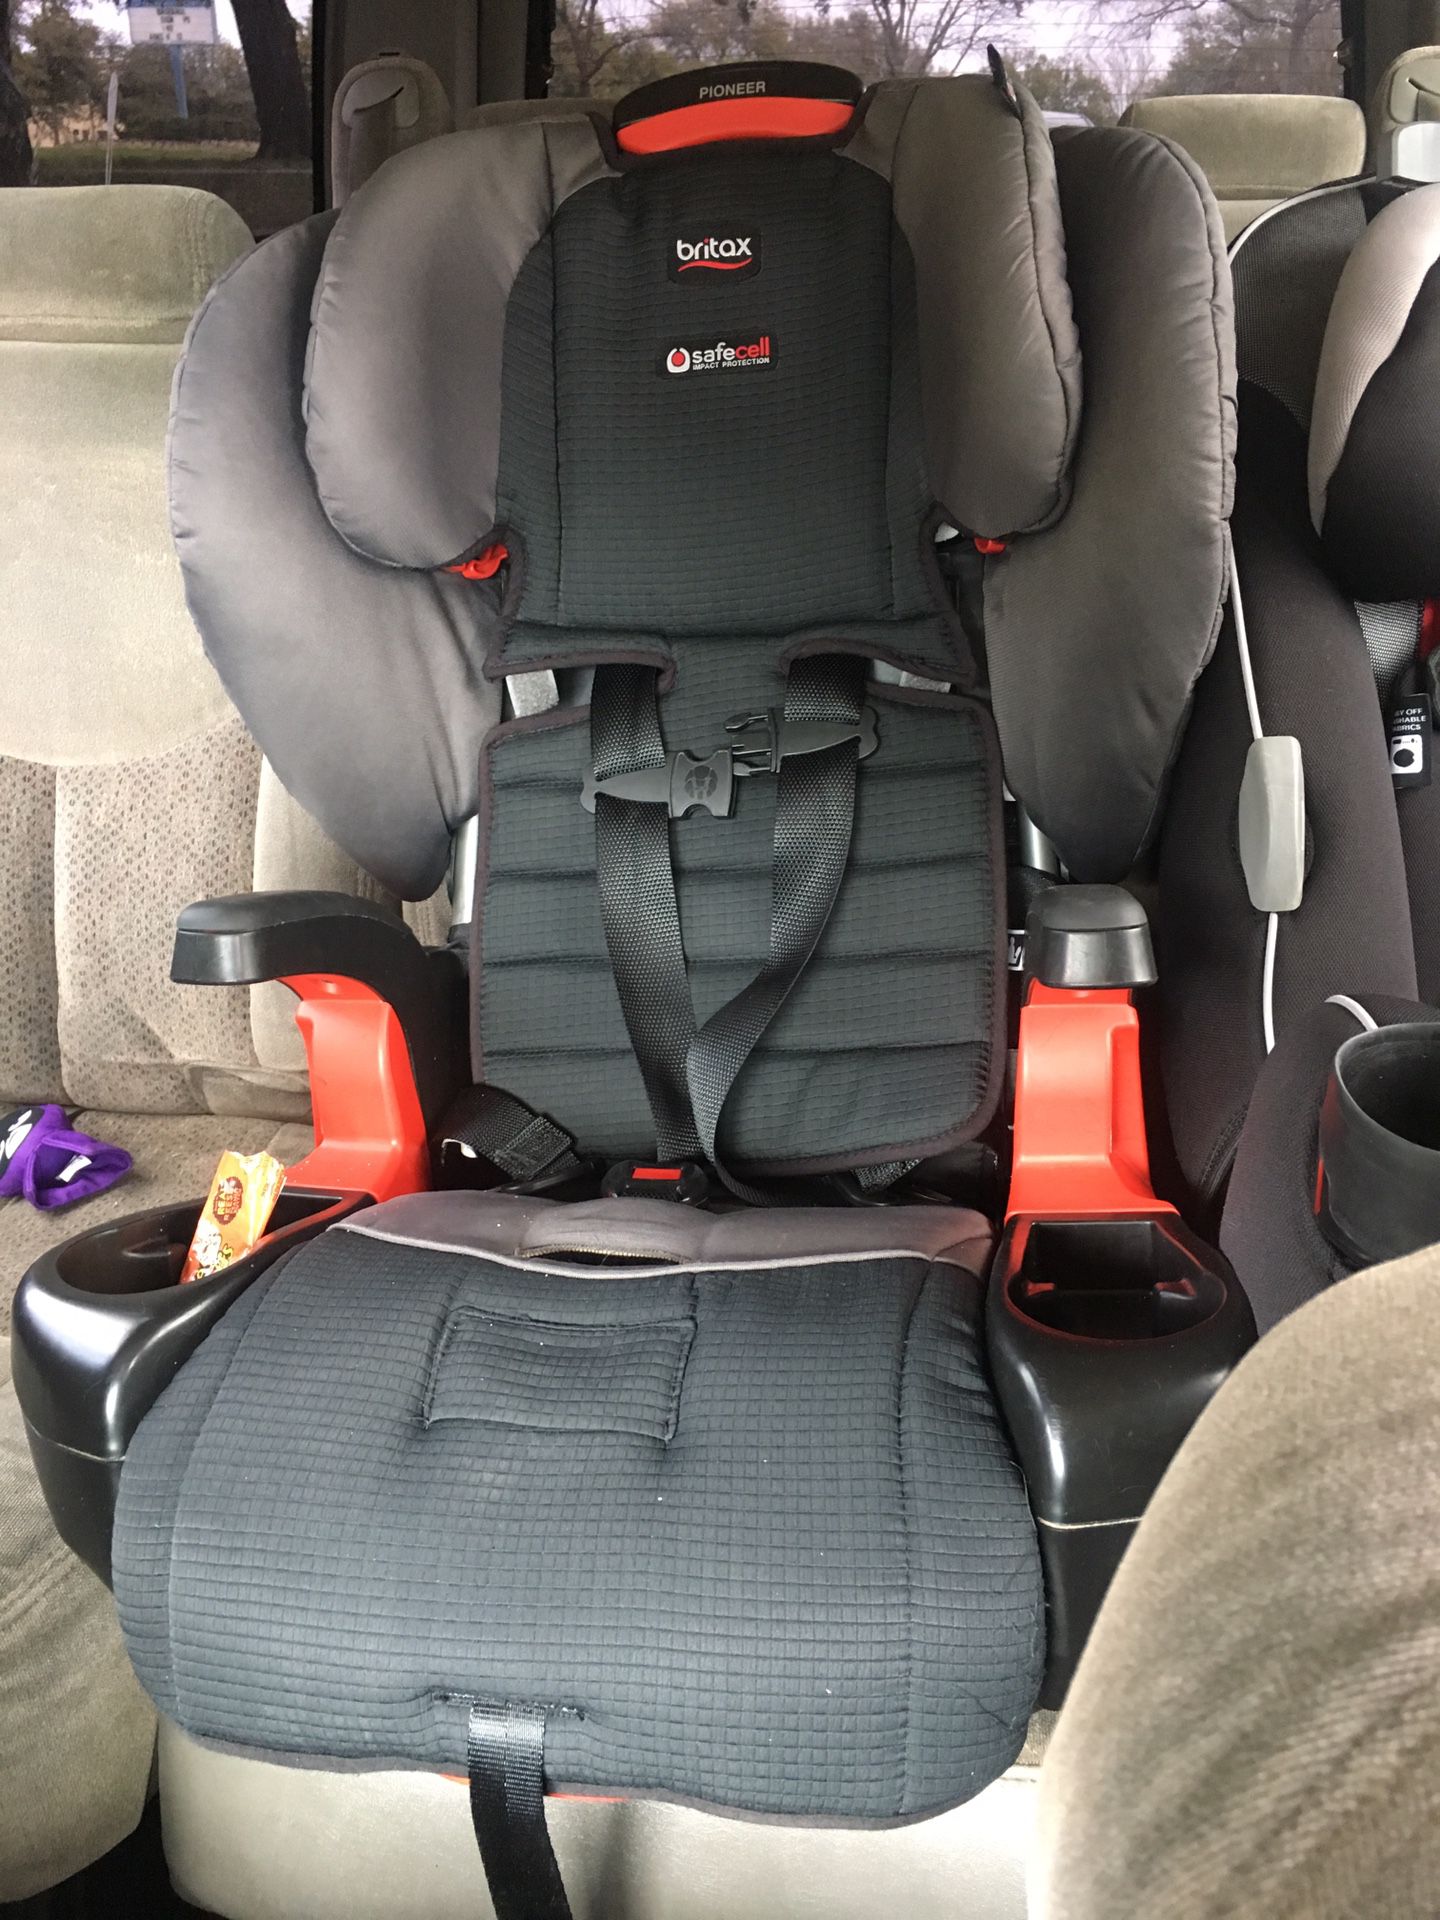 Britax pioneer car seat